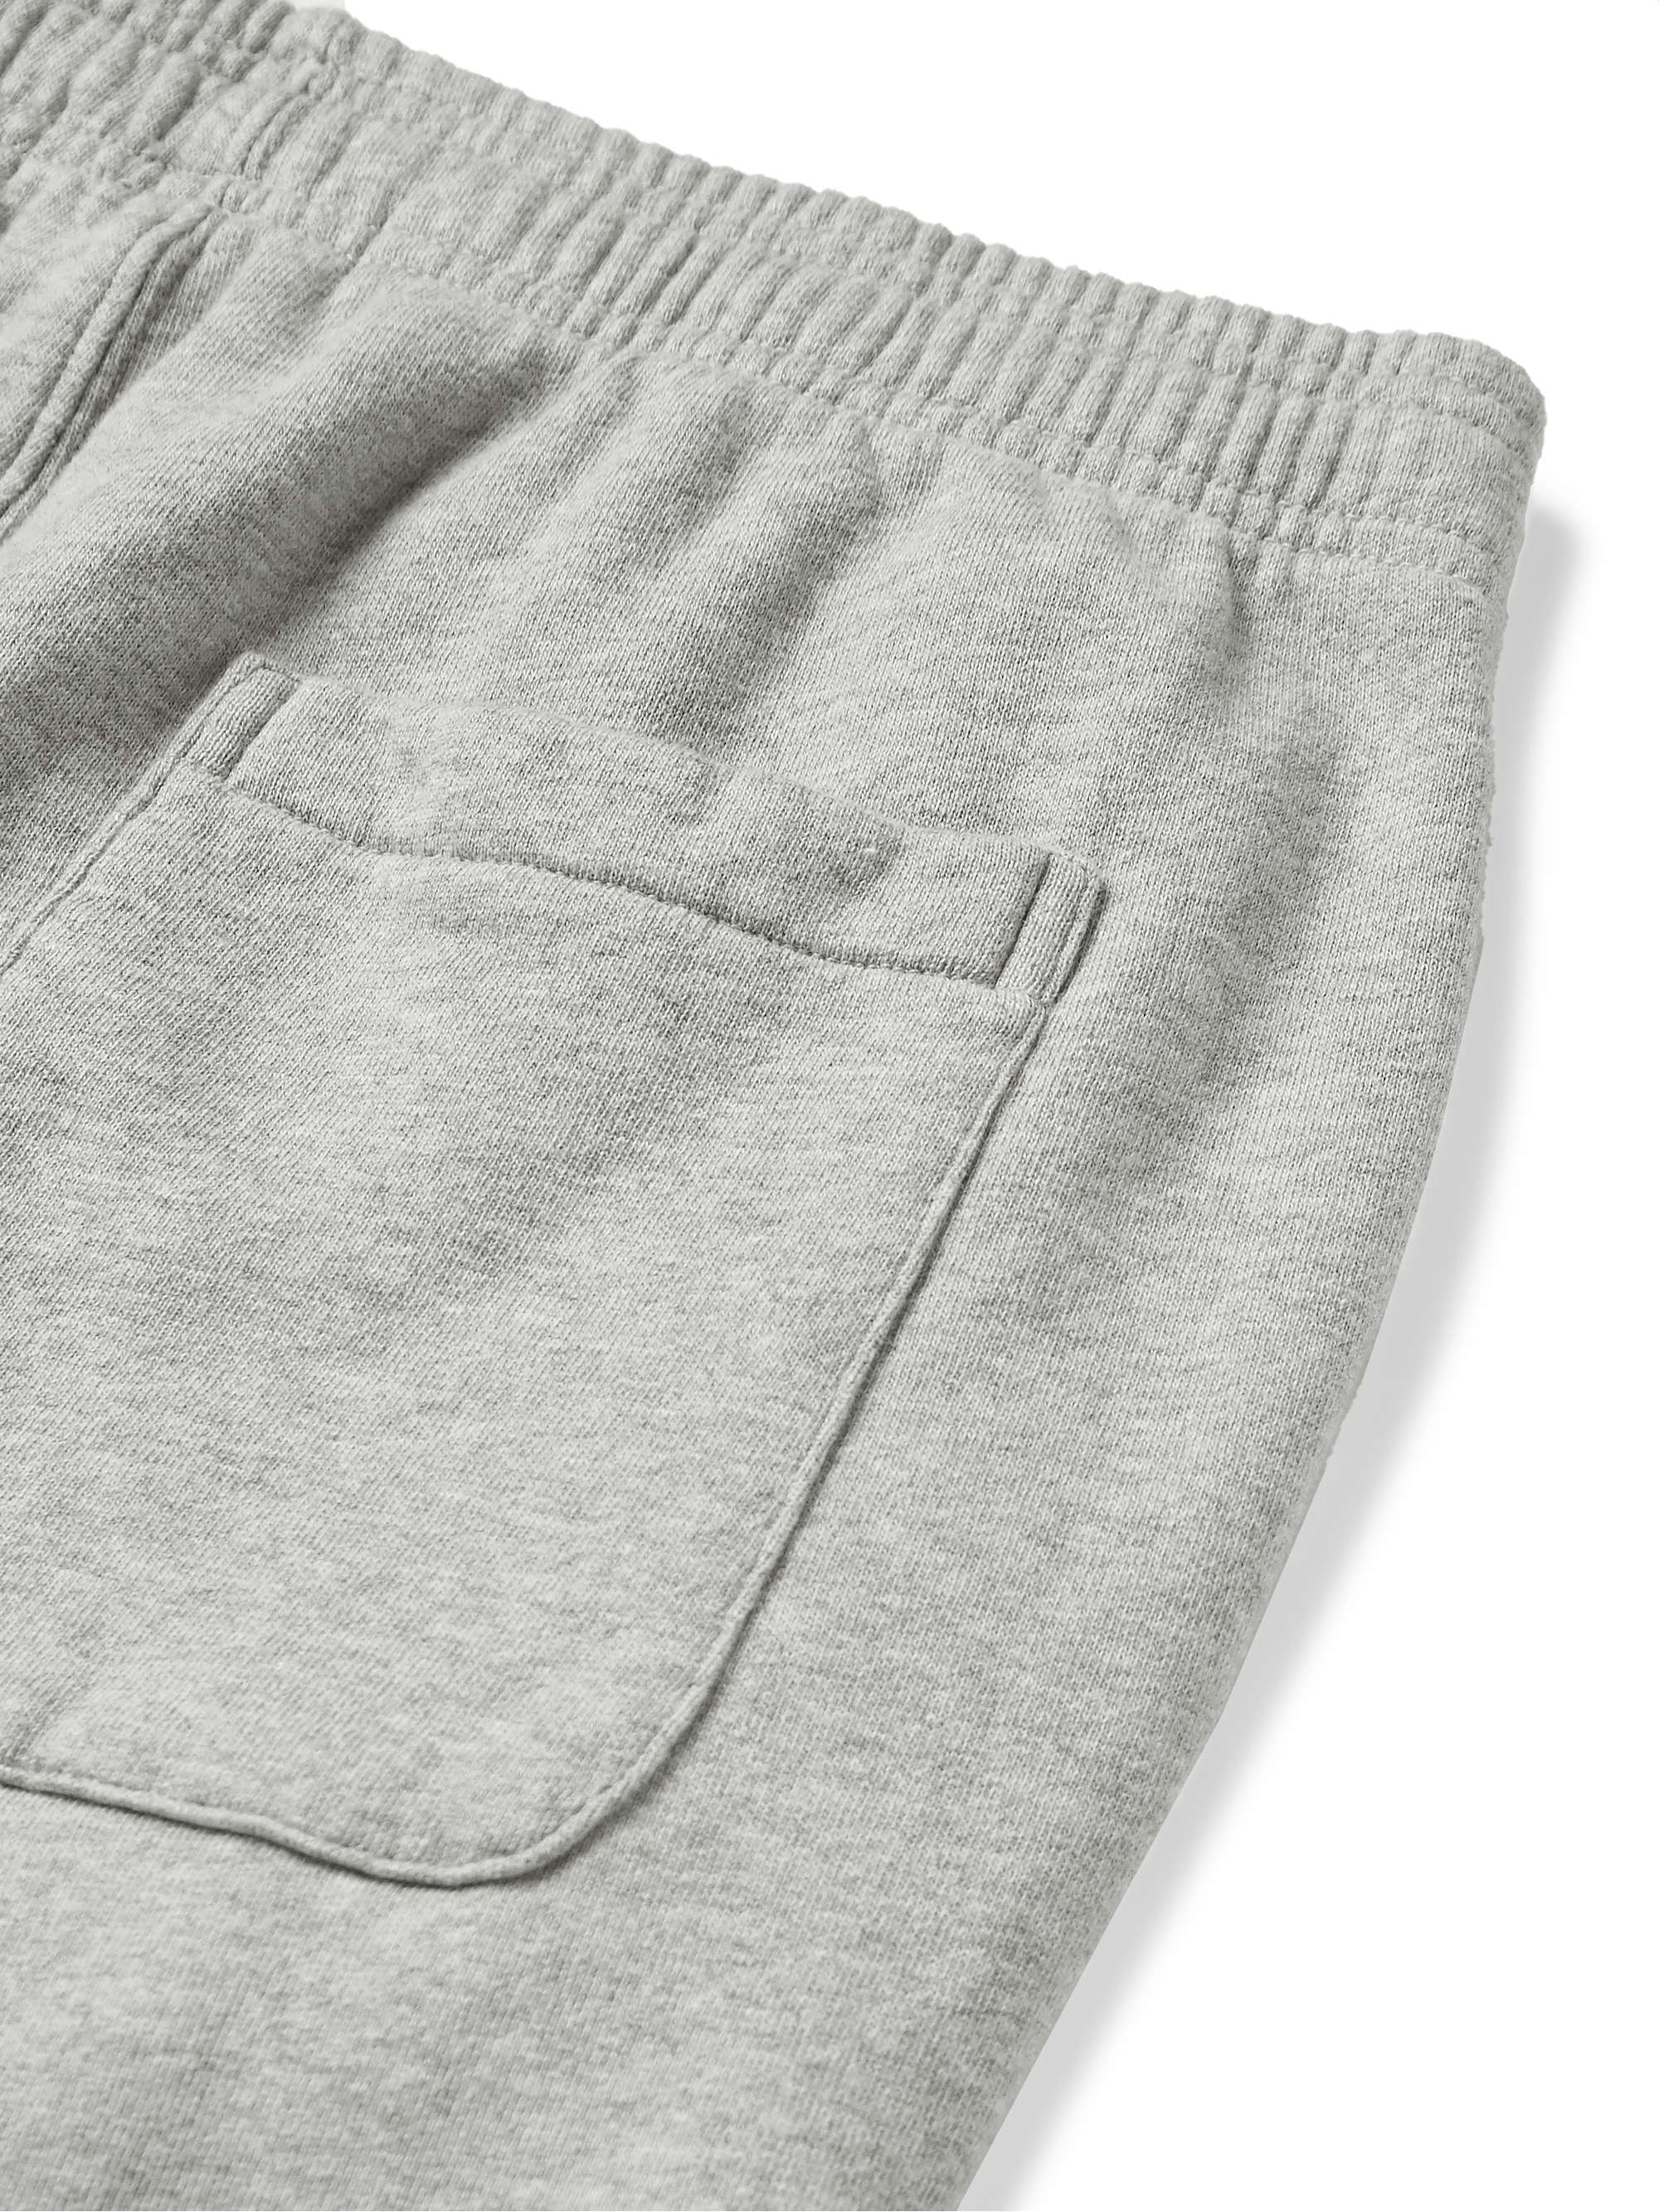 SAVE KHAKI UNITED Slim-Fit Mélange Fleece-Back Cotton-Jersey Sweatpants